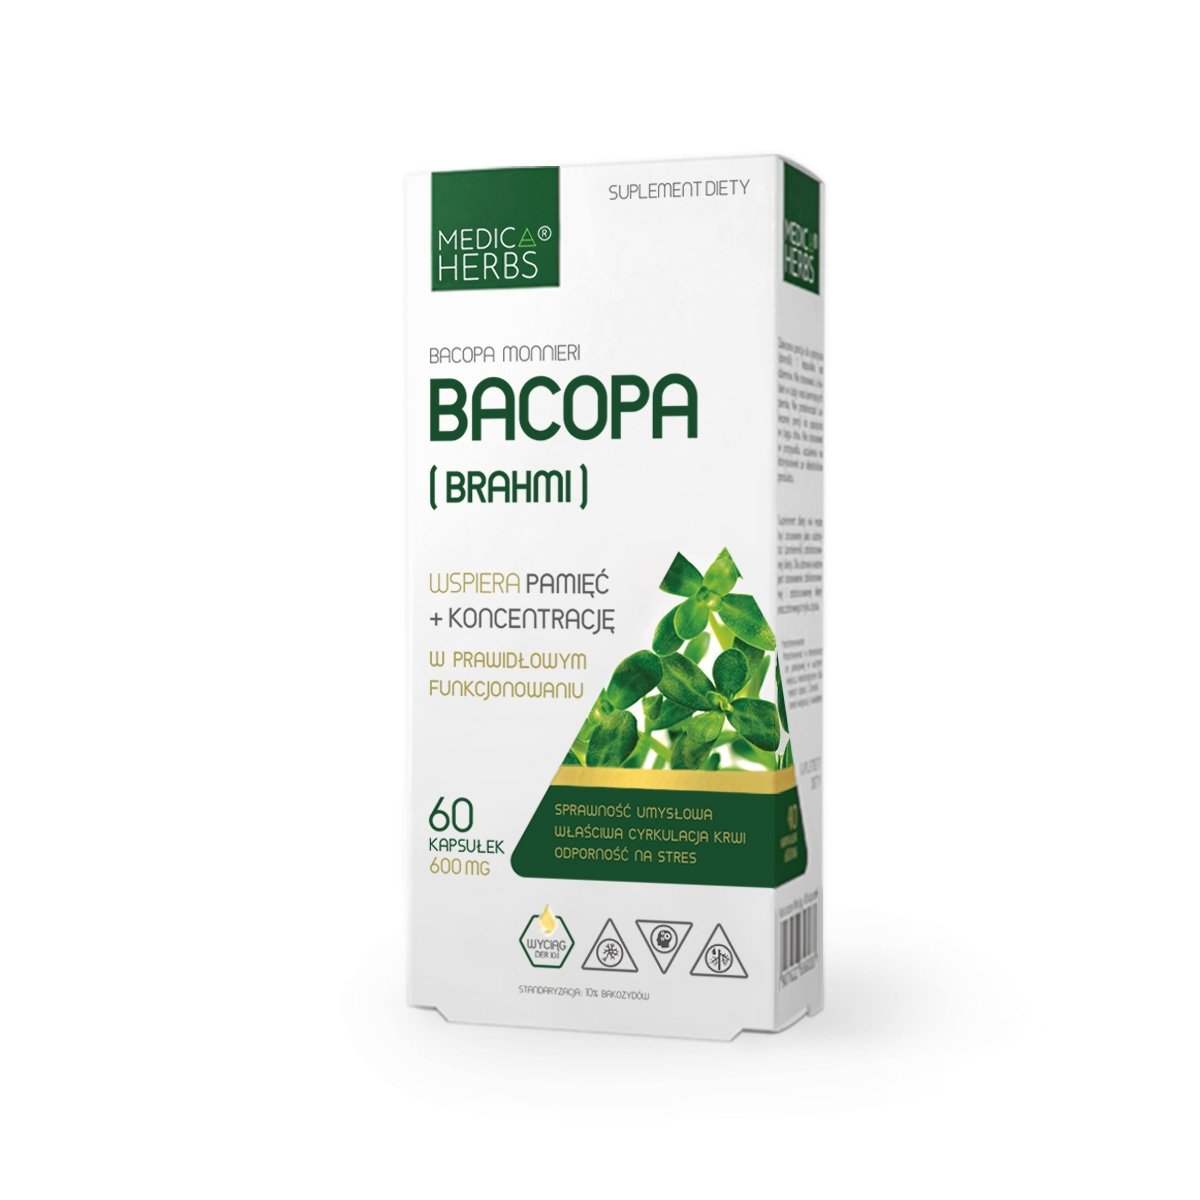 Bacopa monnieri 600mg Medica Herbs PAMIĘĆ KONCENTRACJA